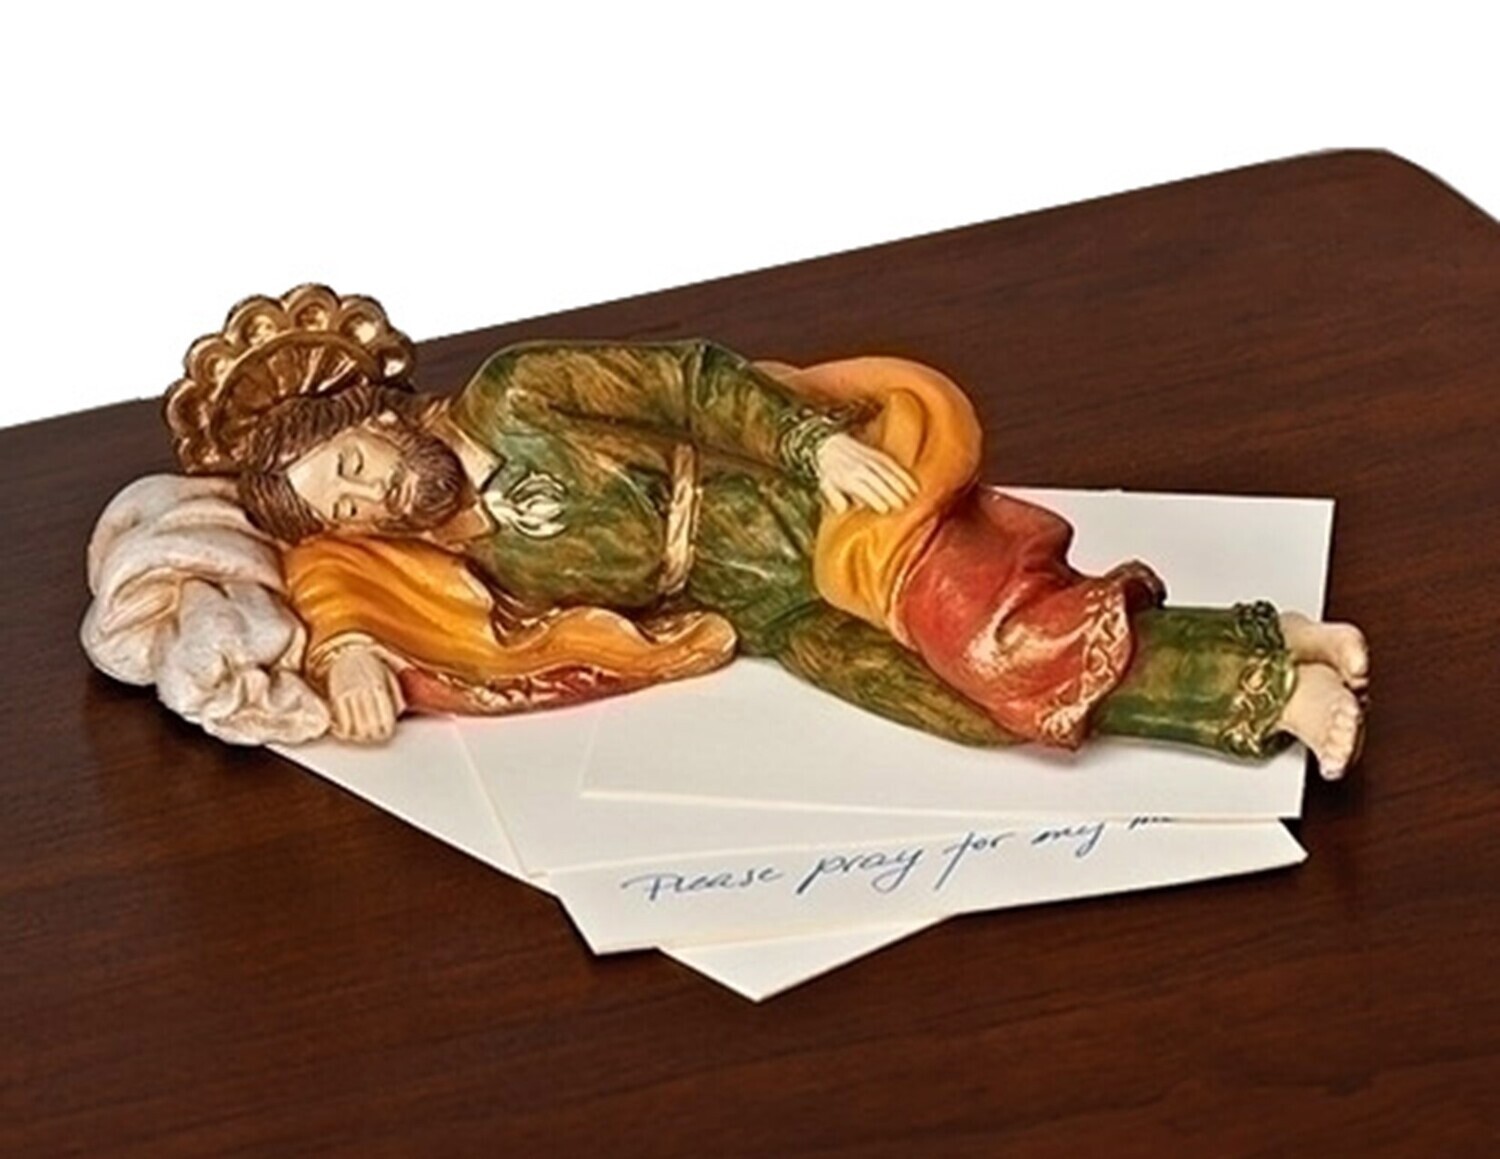 Fontanini 5" Scale "Sleeping Saint Joseph Statue"
(54111)